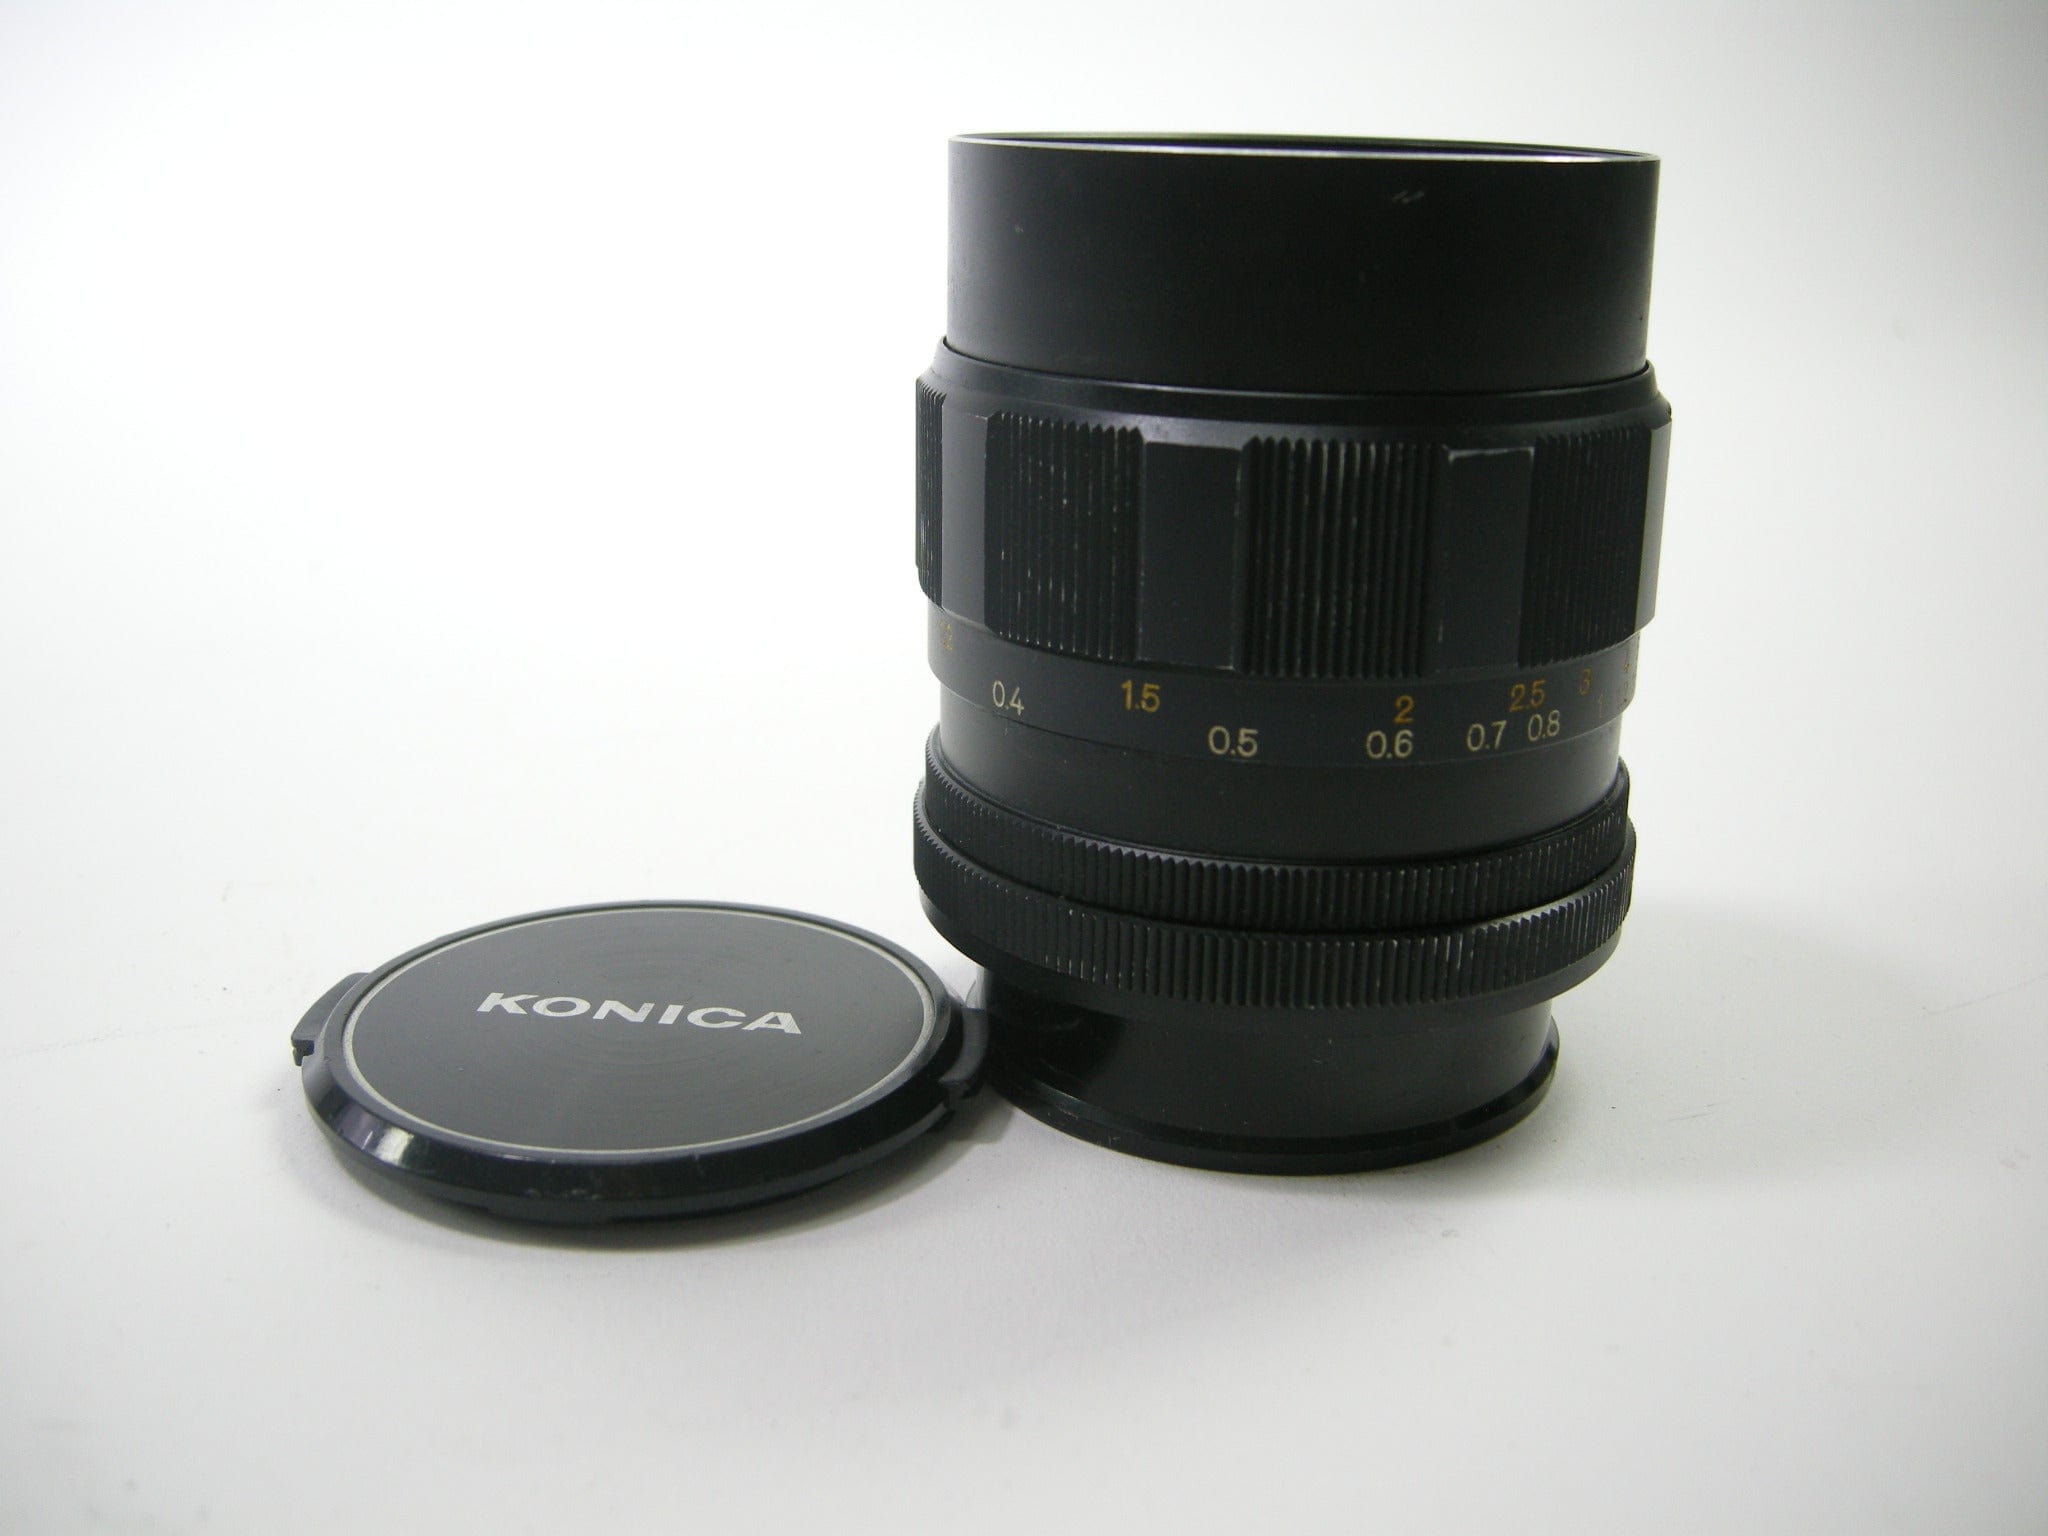 Konica Hexanon AR 35mm f2.8 lens